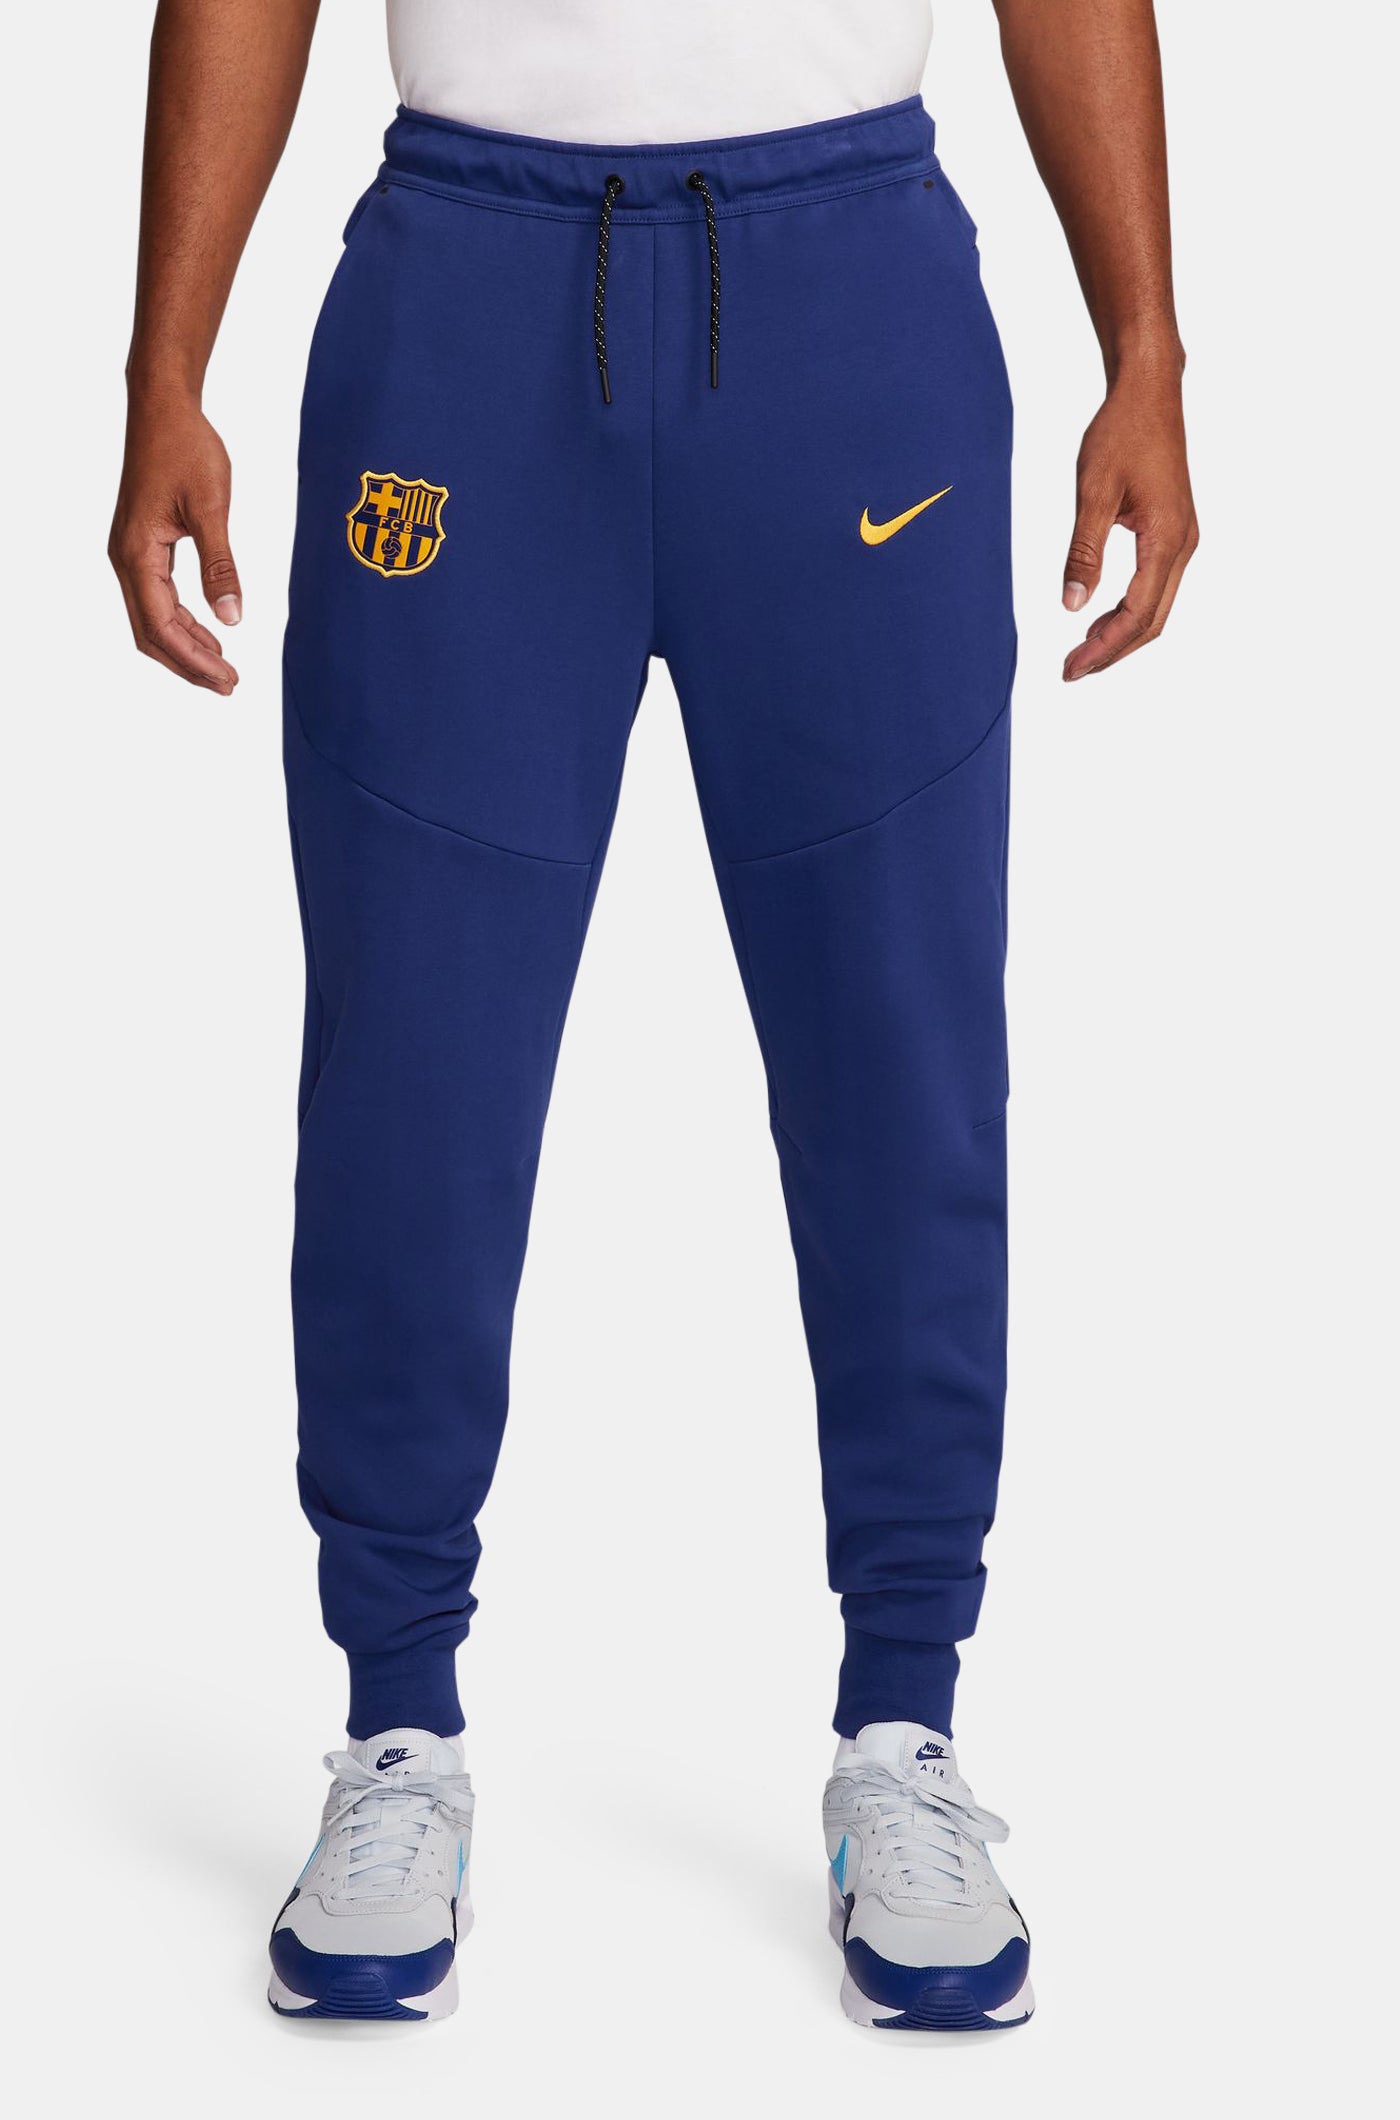 Pant tech blue royal Barça Nike